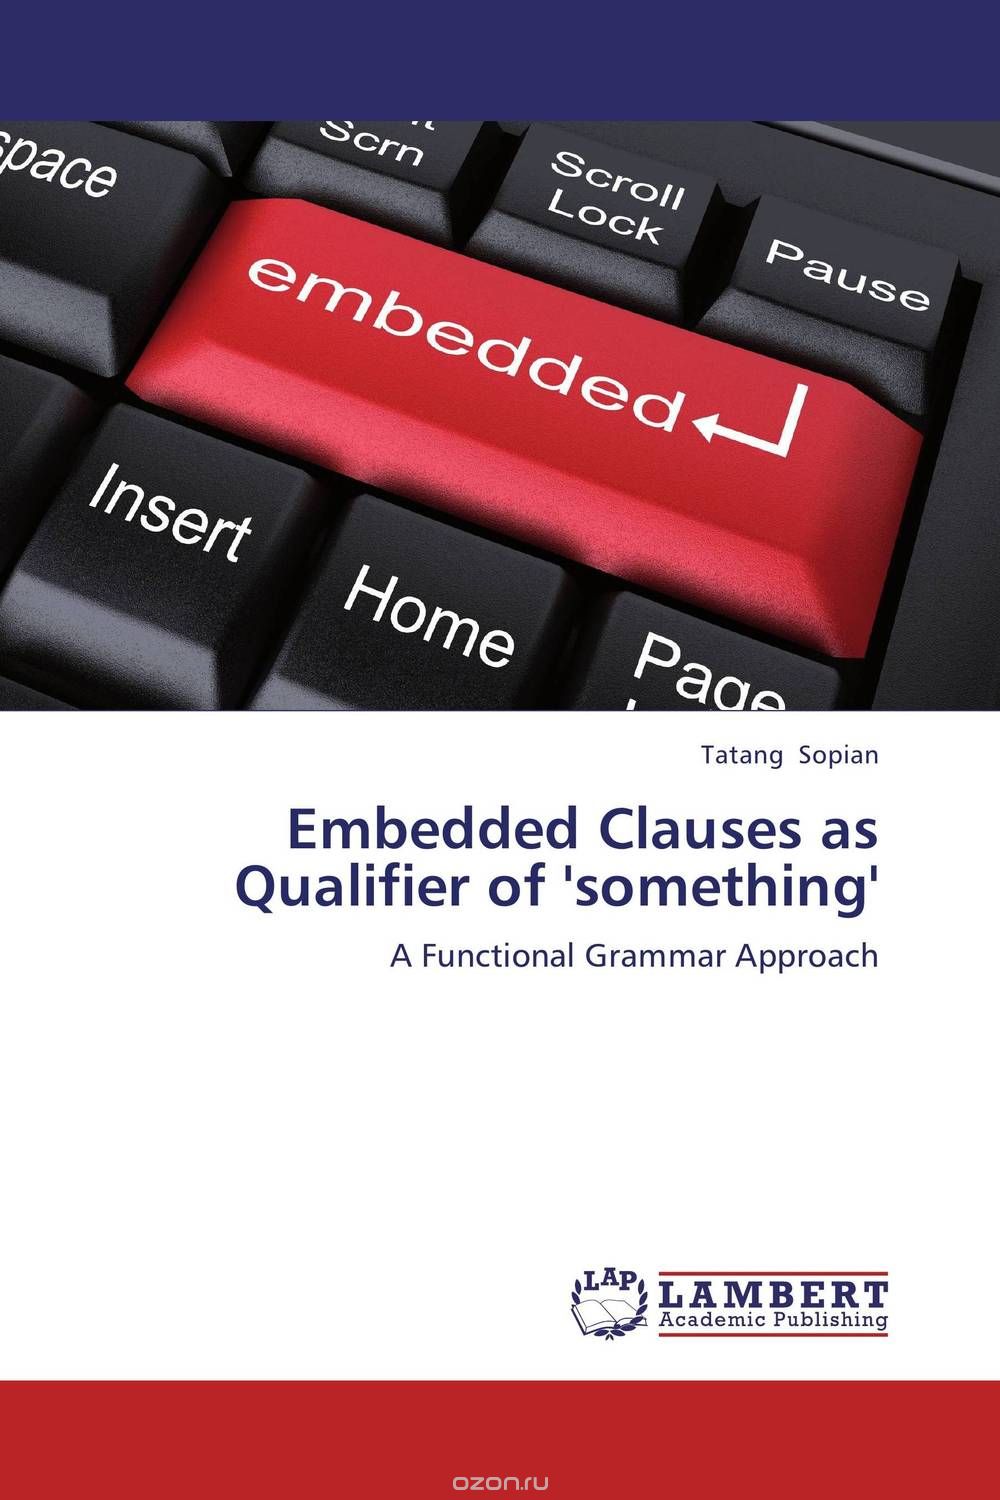 Скачать книгу "Embedded Clauses as Qualifier of 'something'"